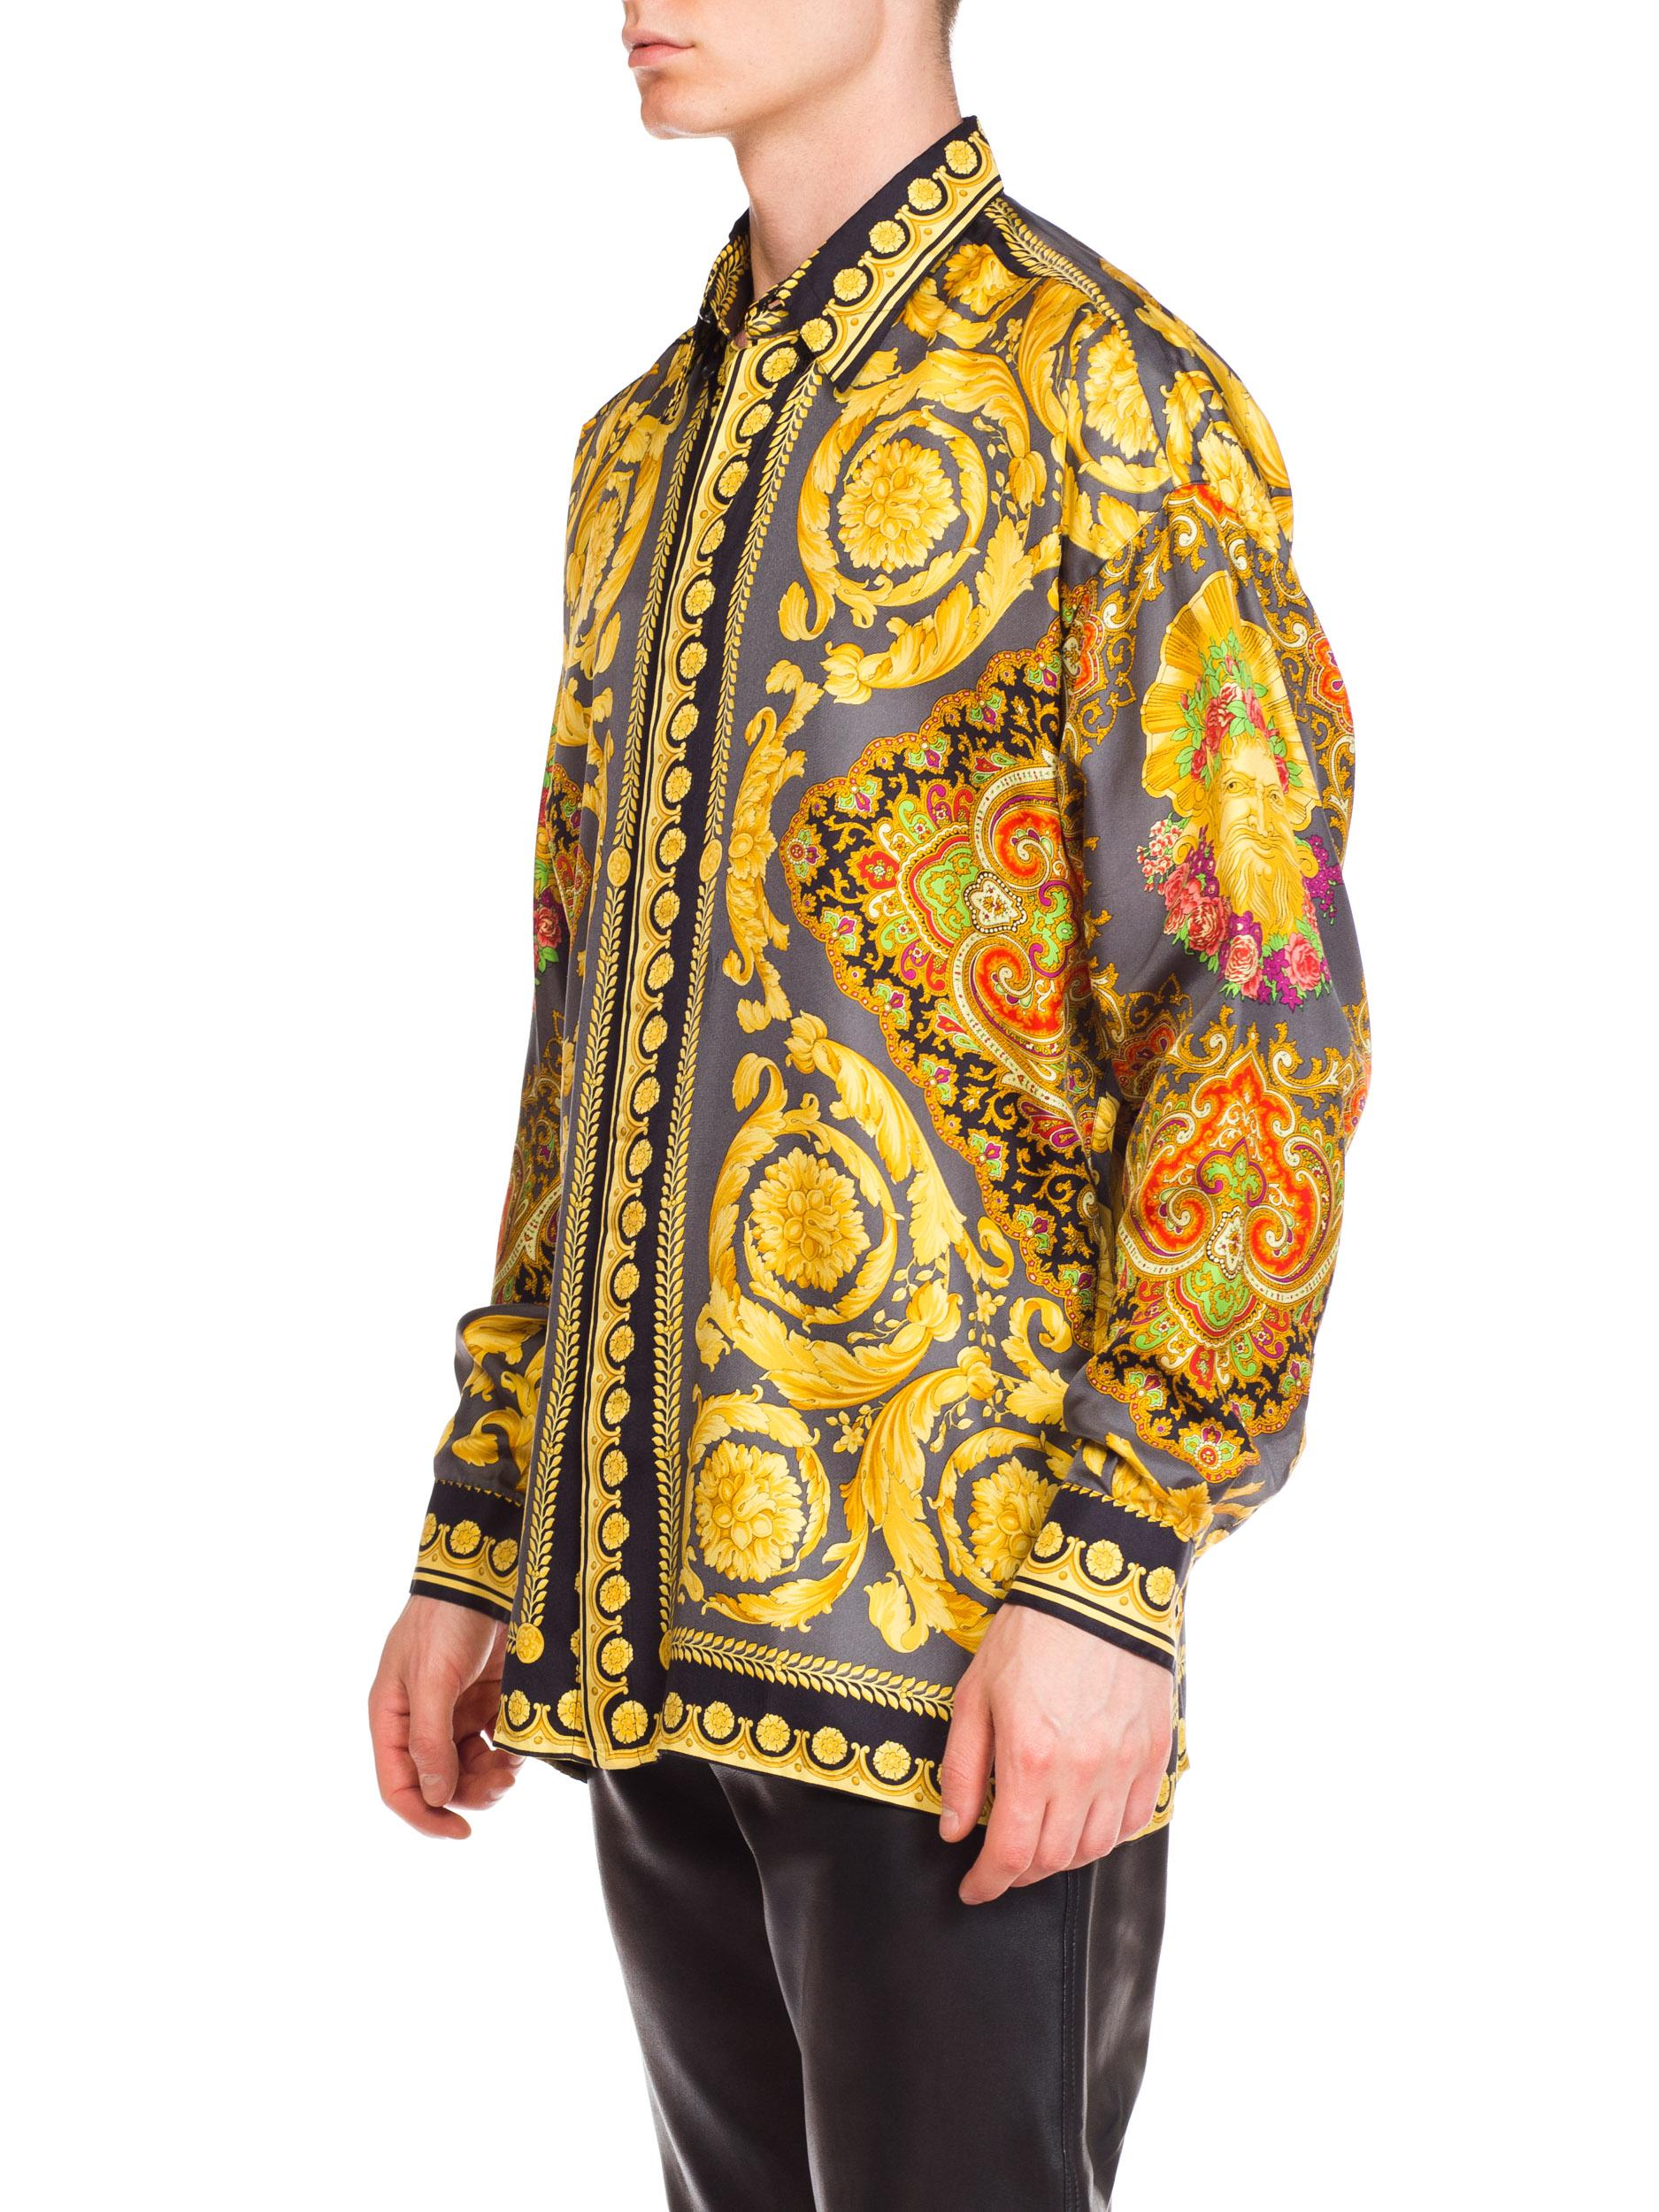 Brown Gianni Versace Men's Baroque Silk Paisley Shirt, 1990s 